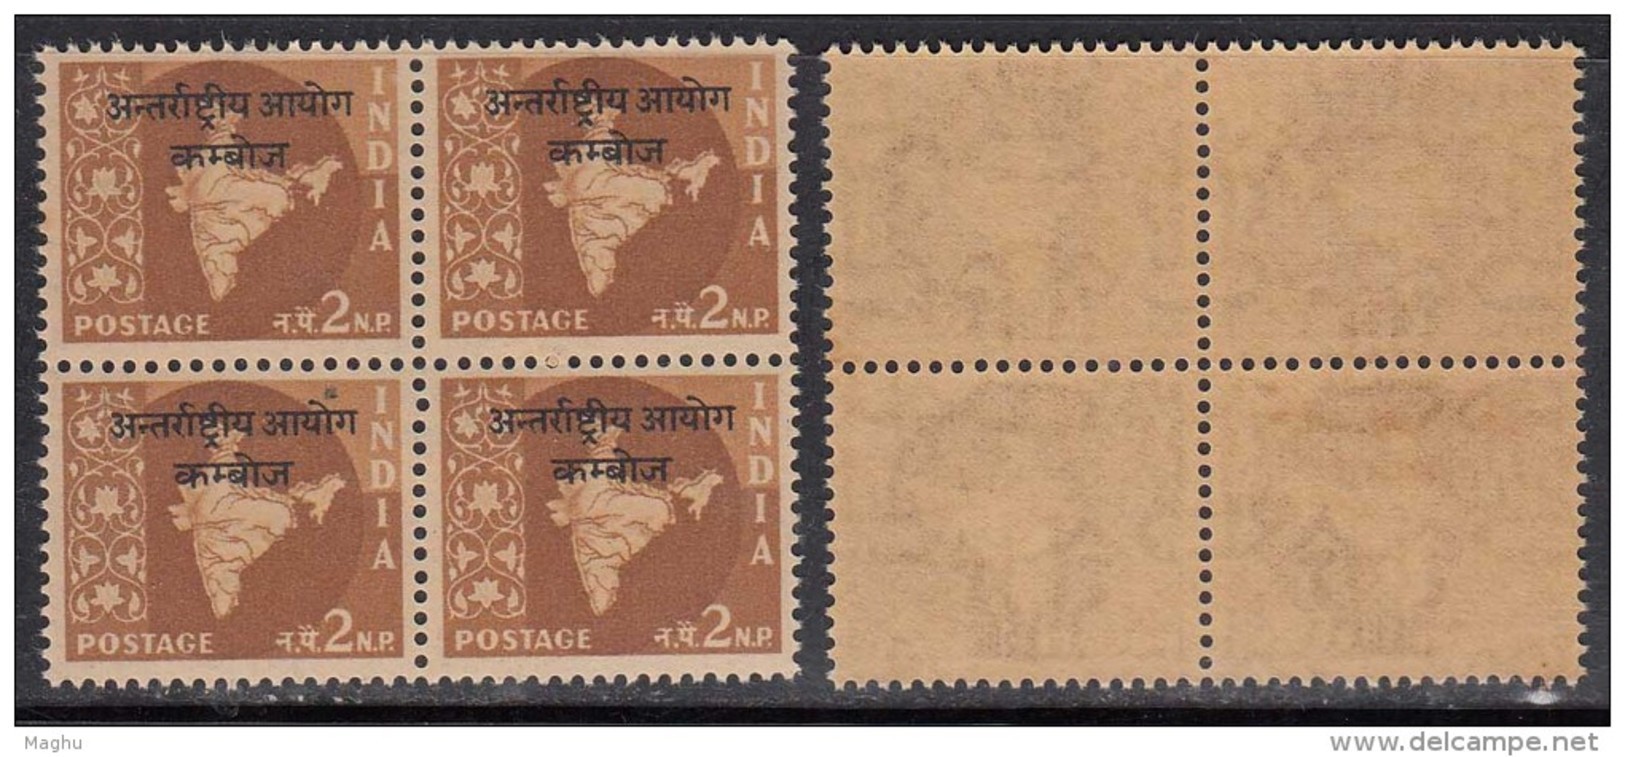 India MNH 1962, Ovpt. Cambodia On 2np Map Series, Ashokan Watermark, Block Of 4, - Franchigia Militare